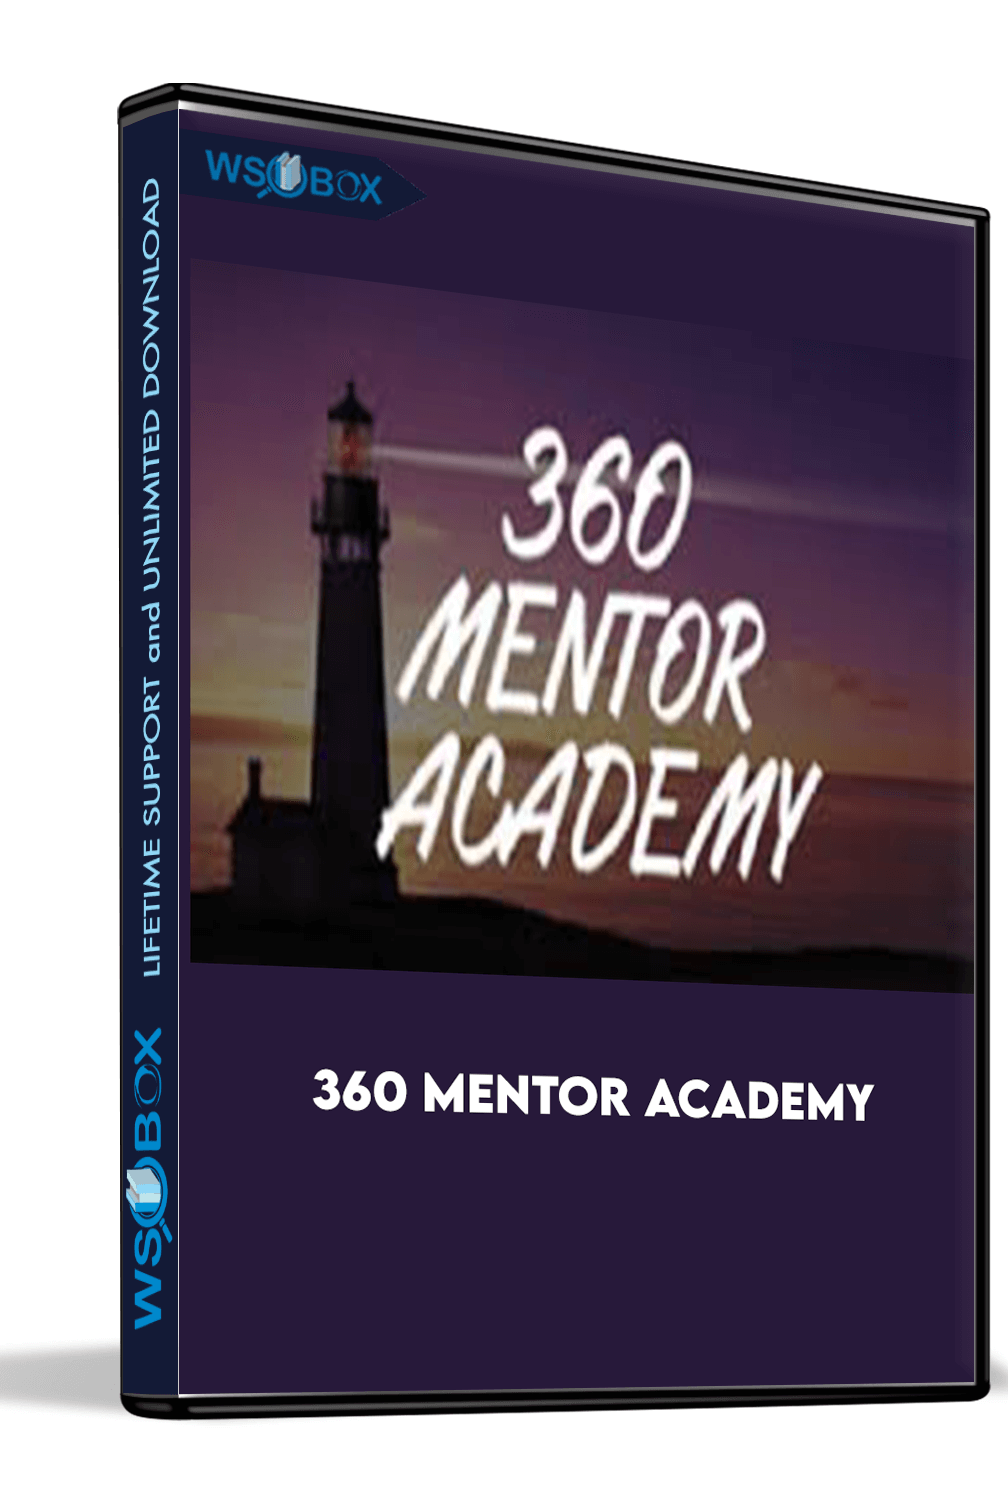 360 Mentor Academy